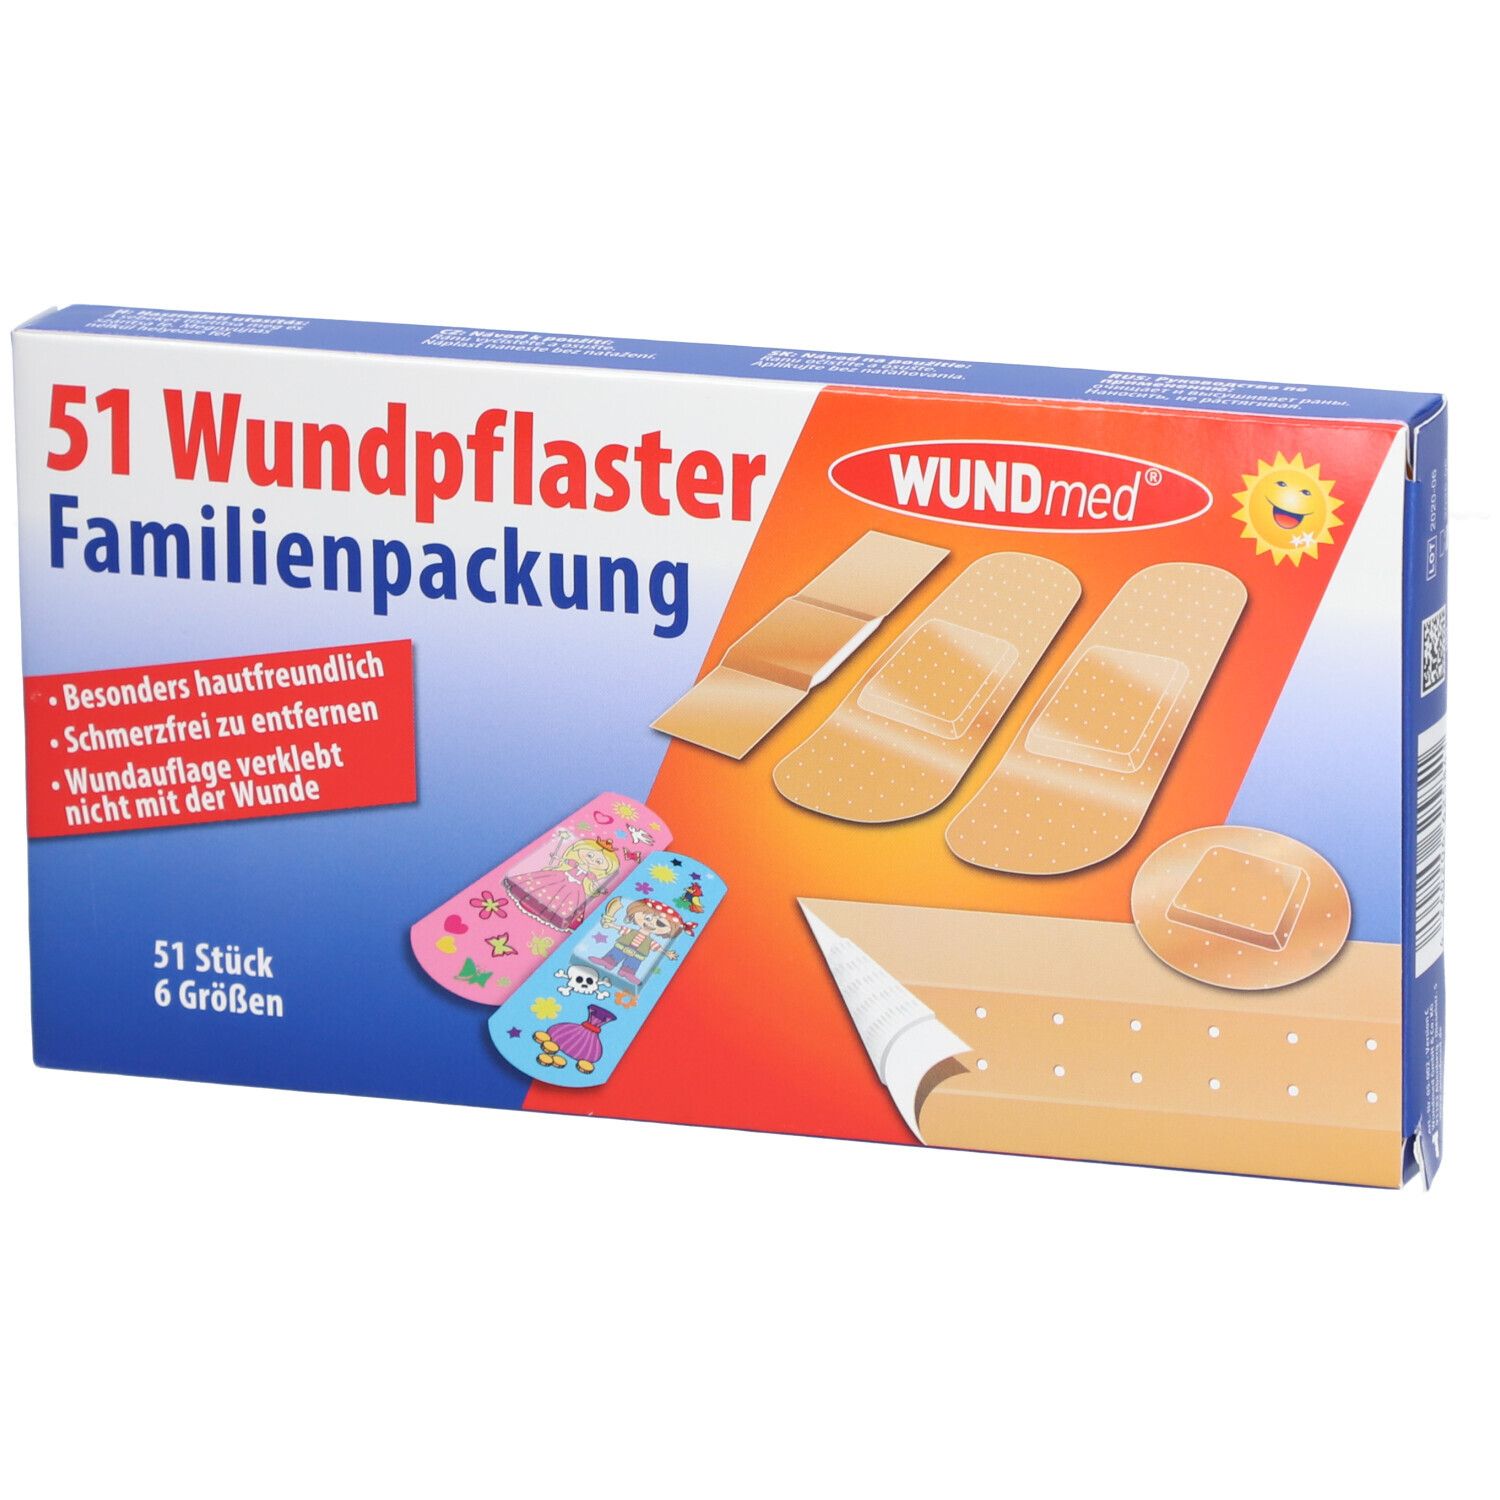 WUNDmed® Wundpflaster Familienpackung